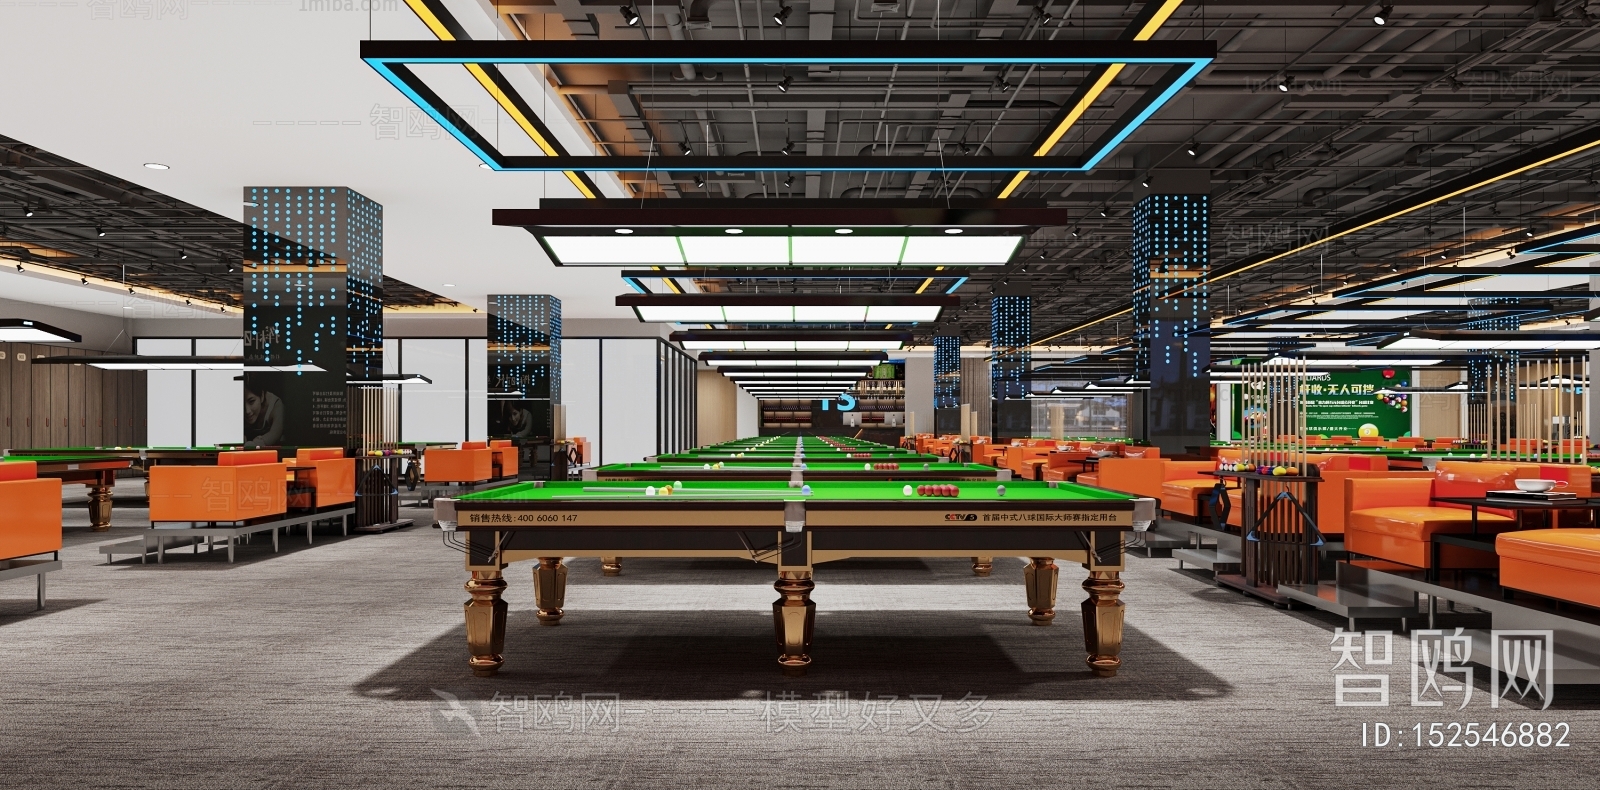 Modern Industrial Style Billiard Room